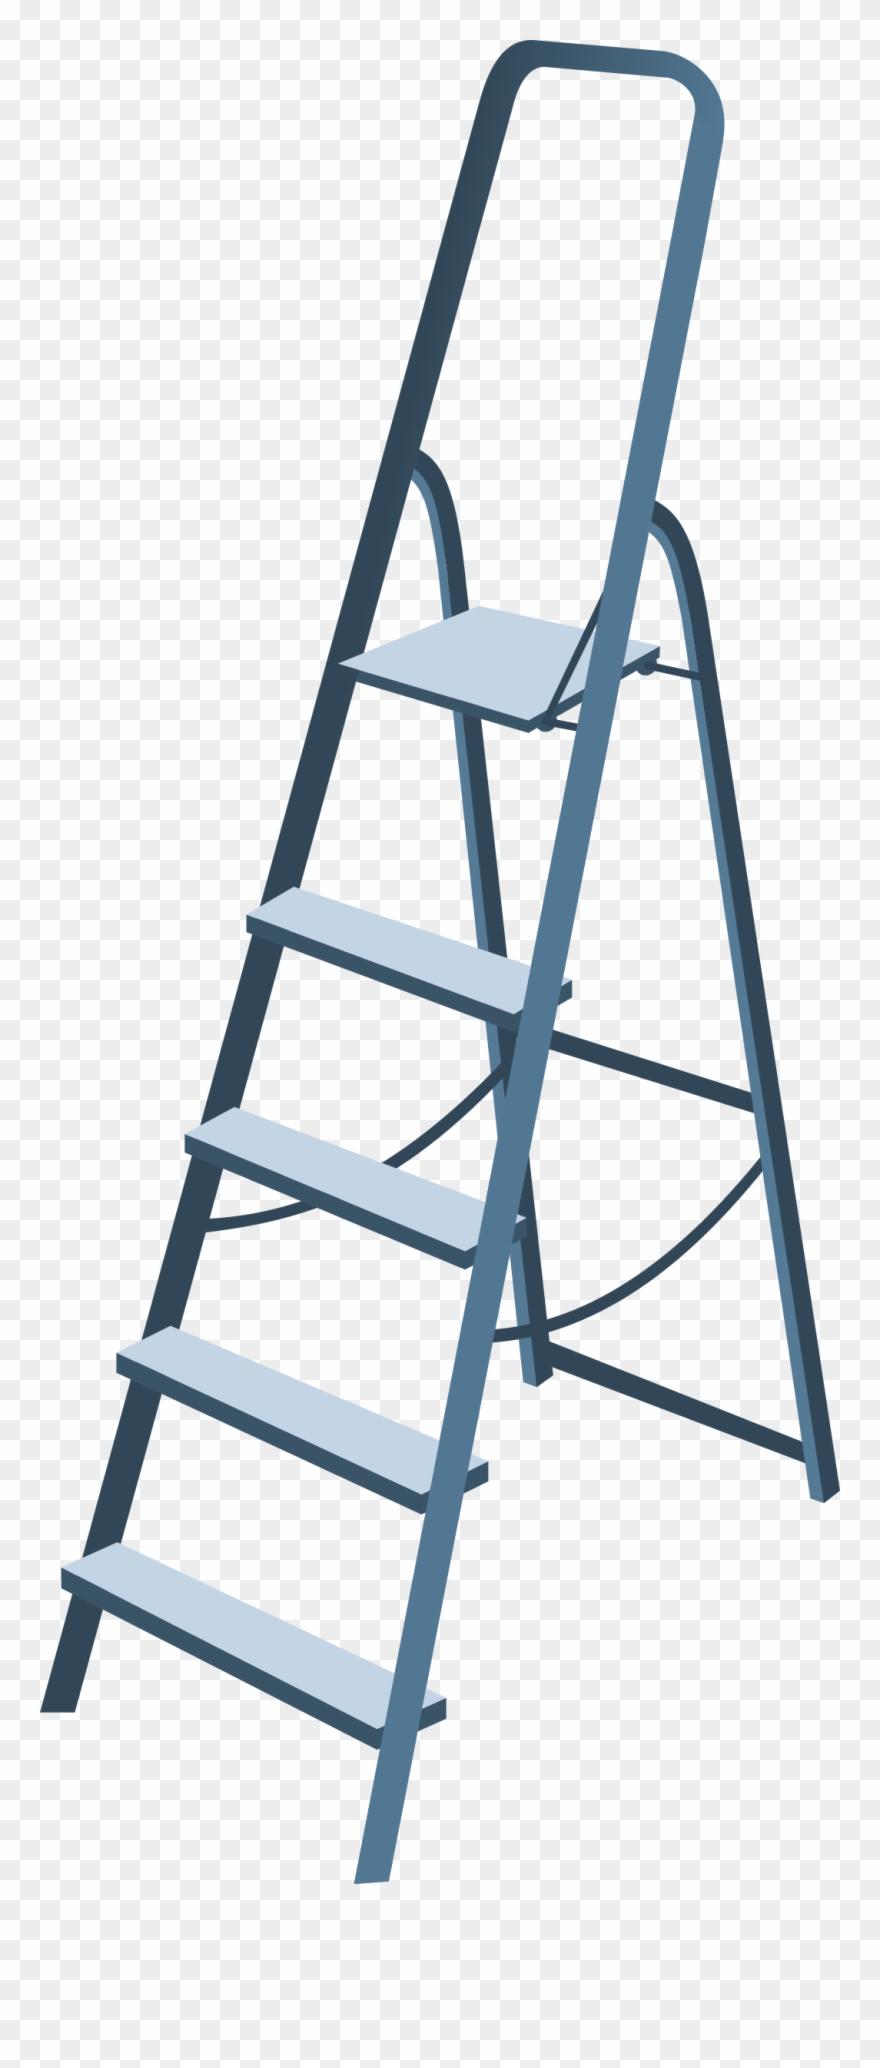 Step ladder clip.